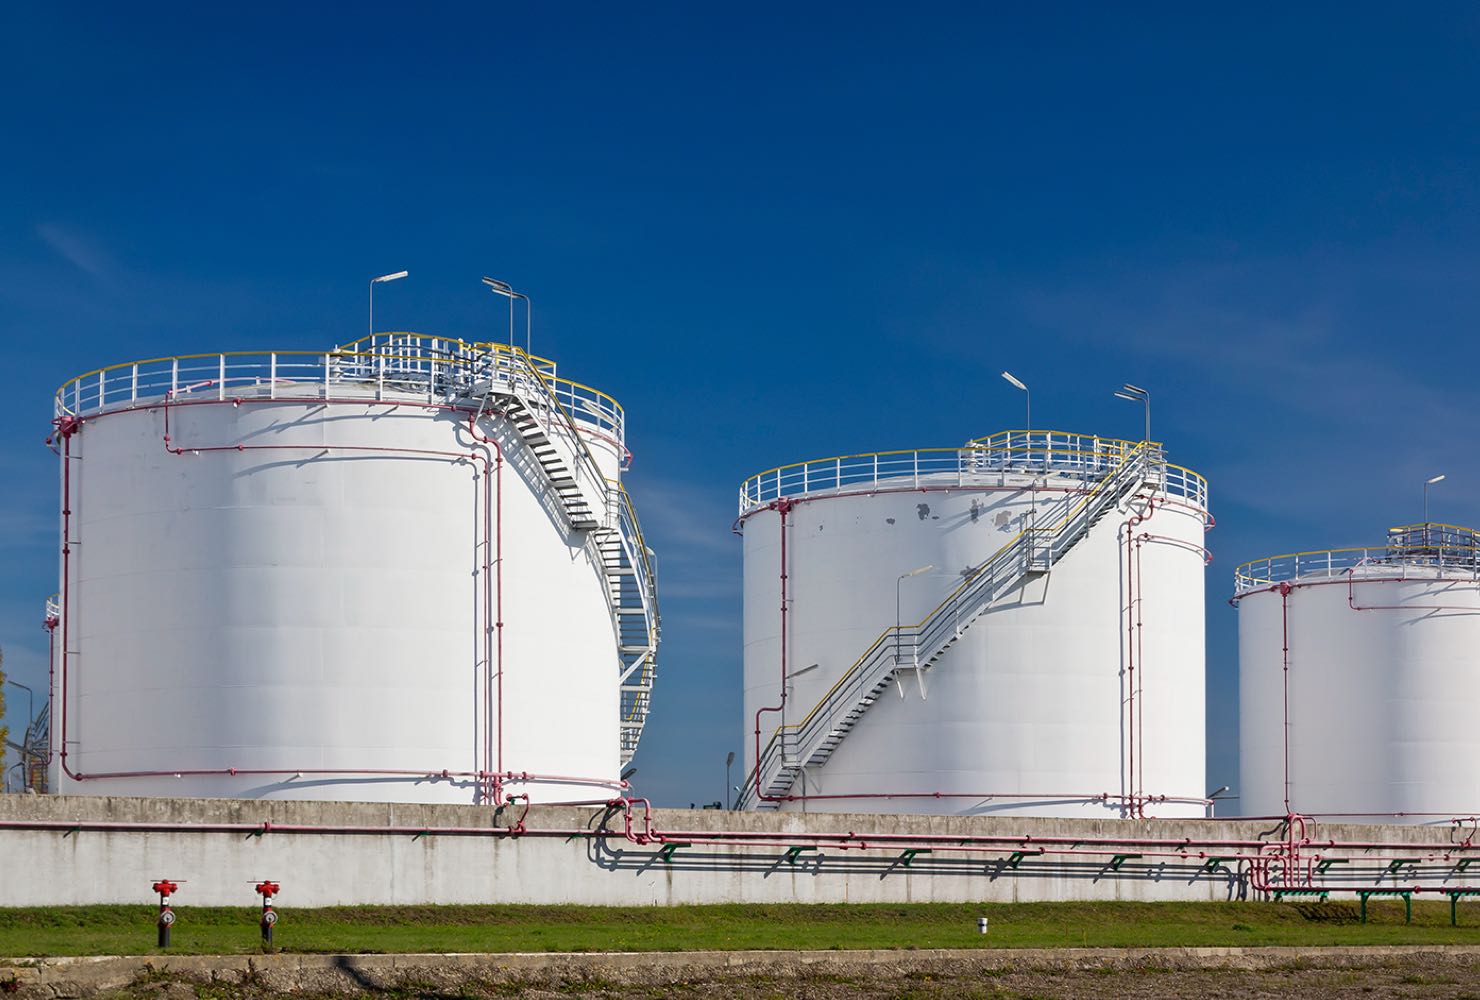 oil storage tanks